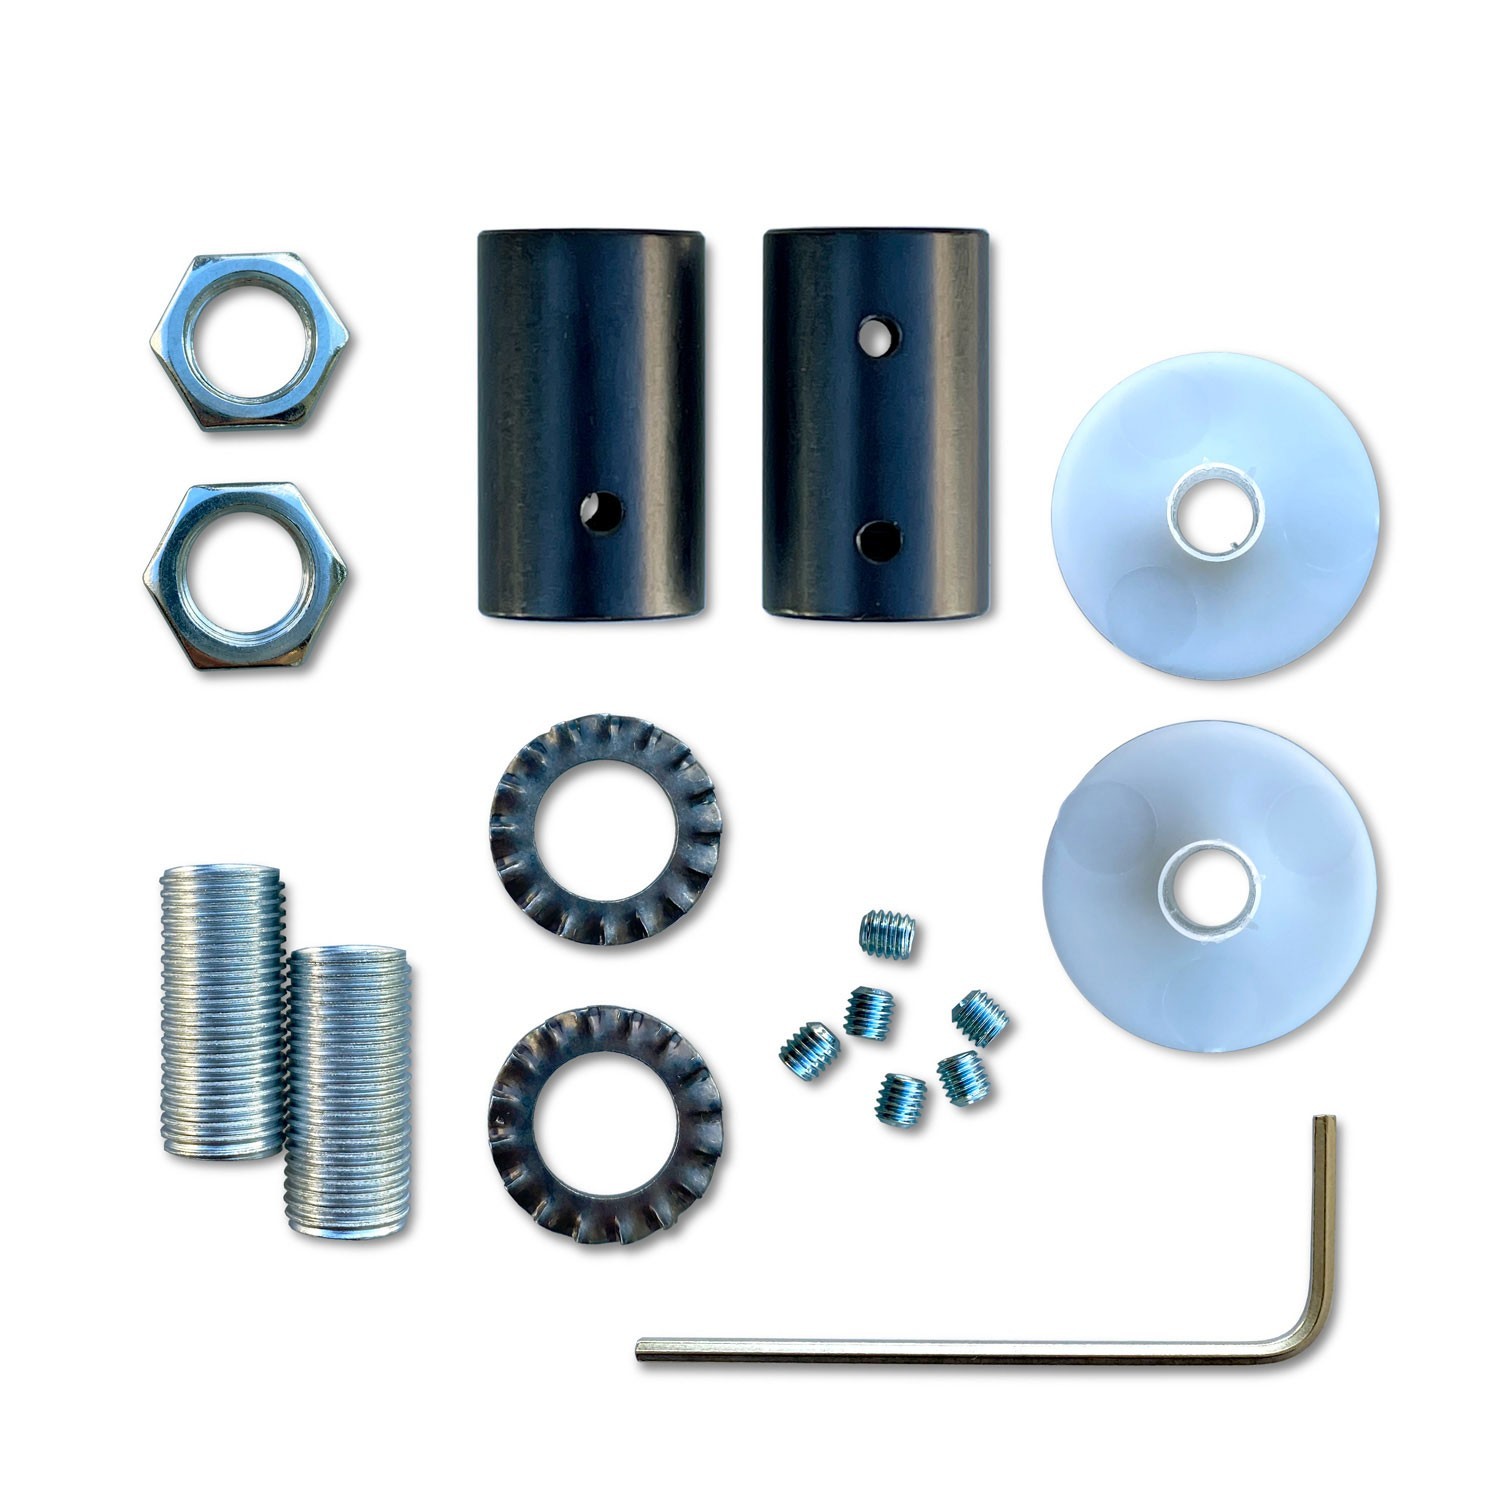 Kit Creative Flex fleksibelt rør i babyblå RM76 tekstilforing med metalterminaler